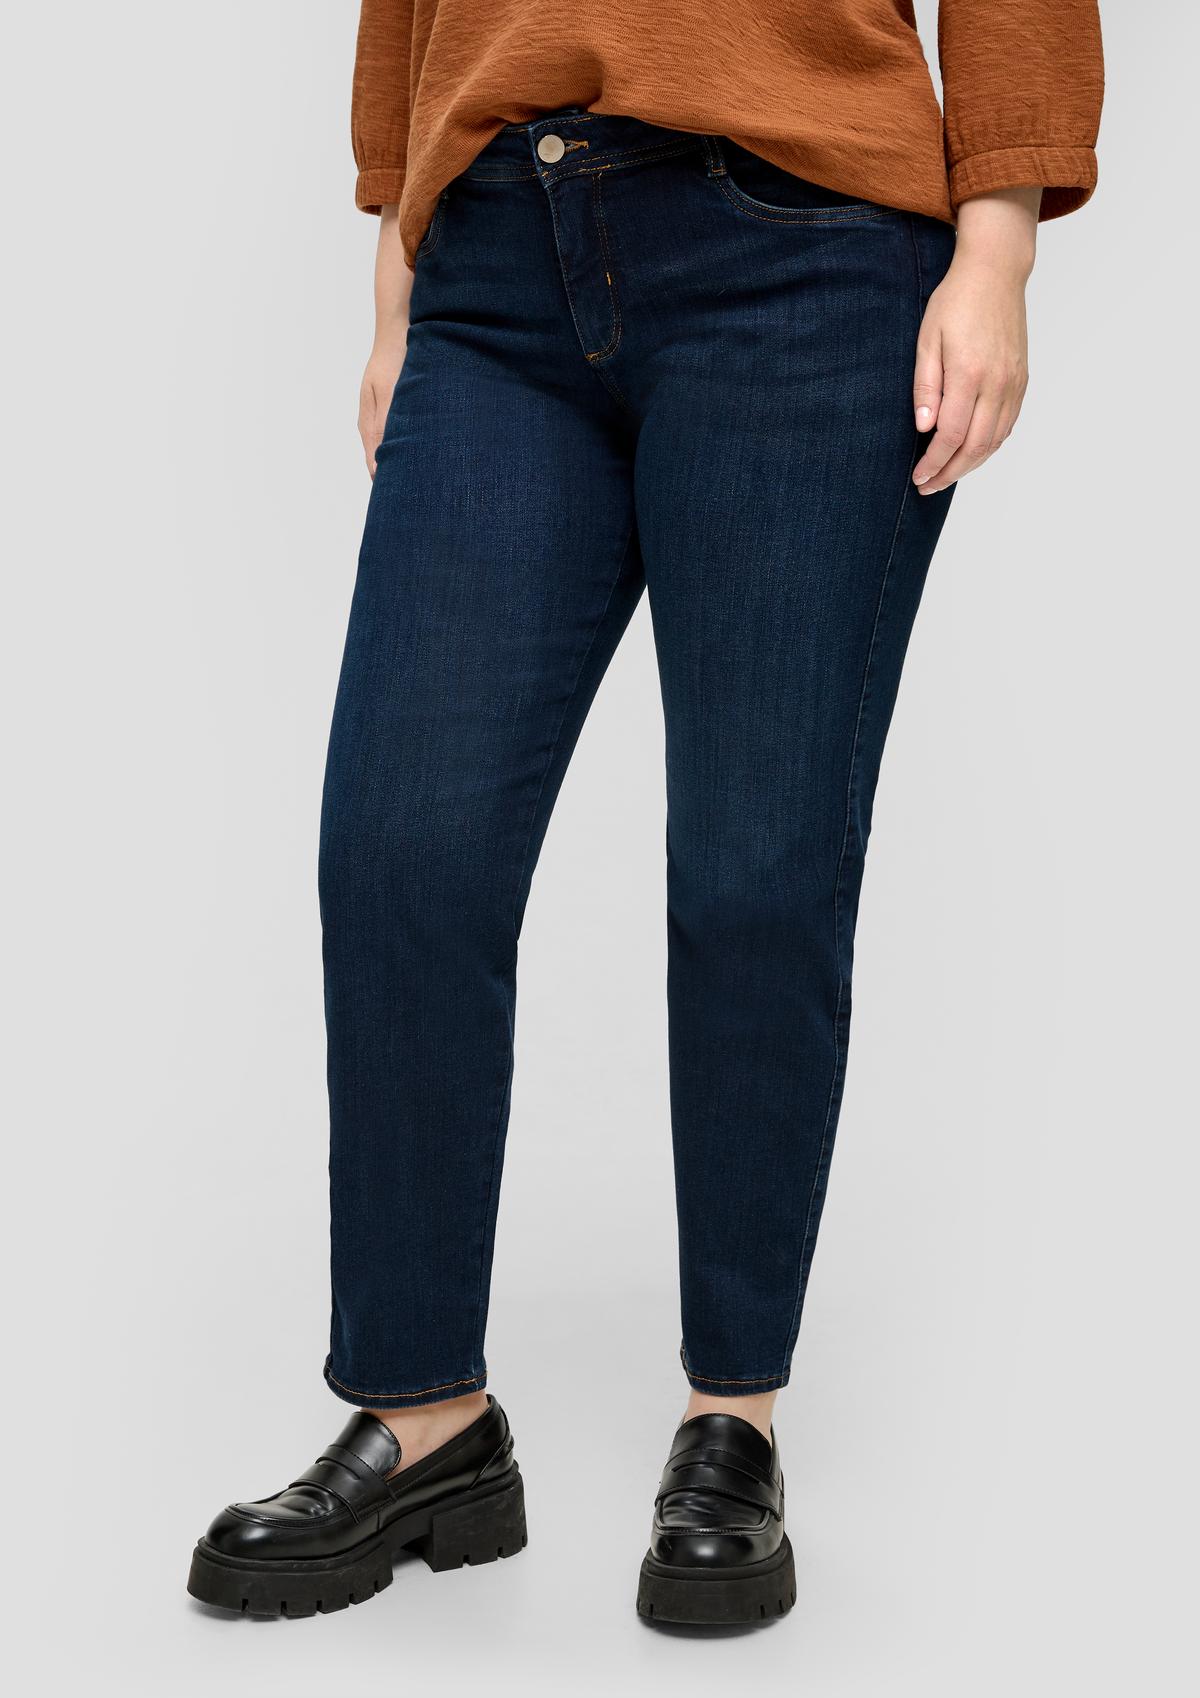 s.Oliver Jeans / regular fit / mid rise / straight leg / vintage look